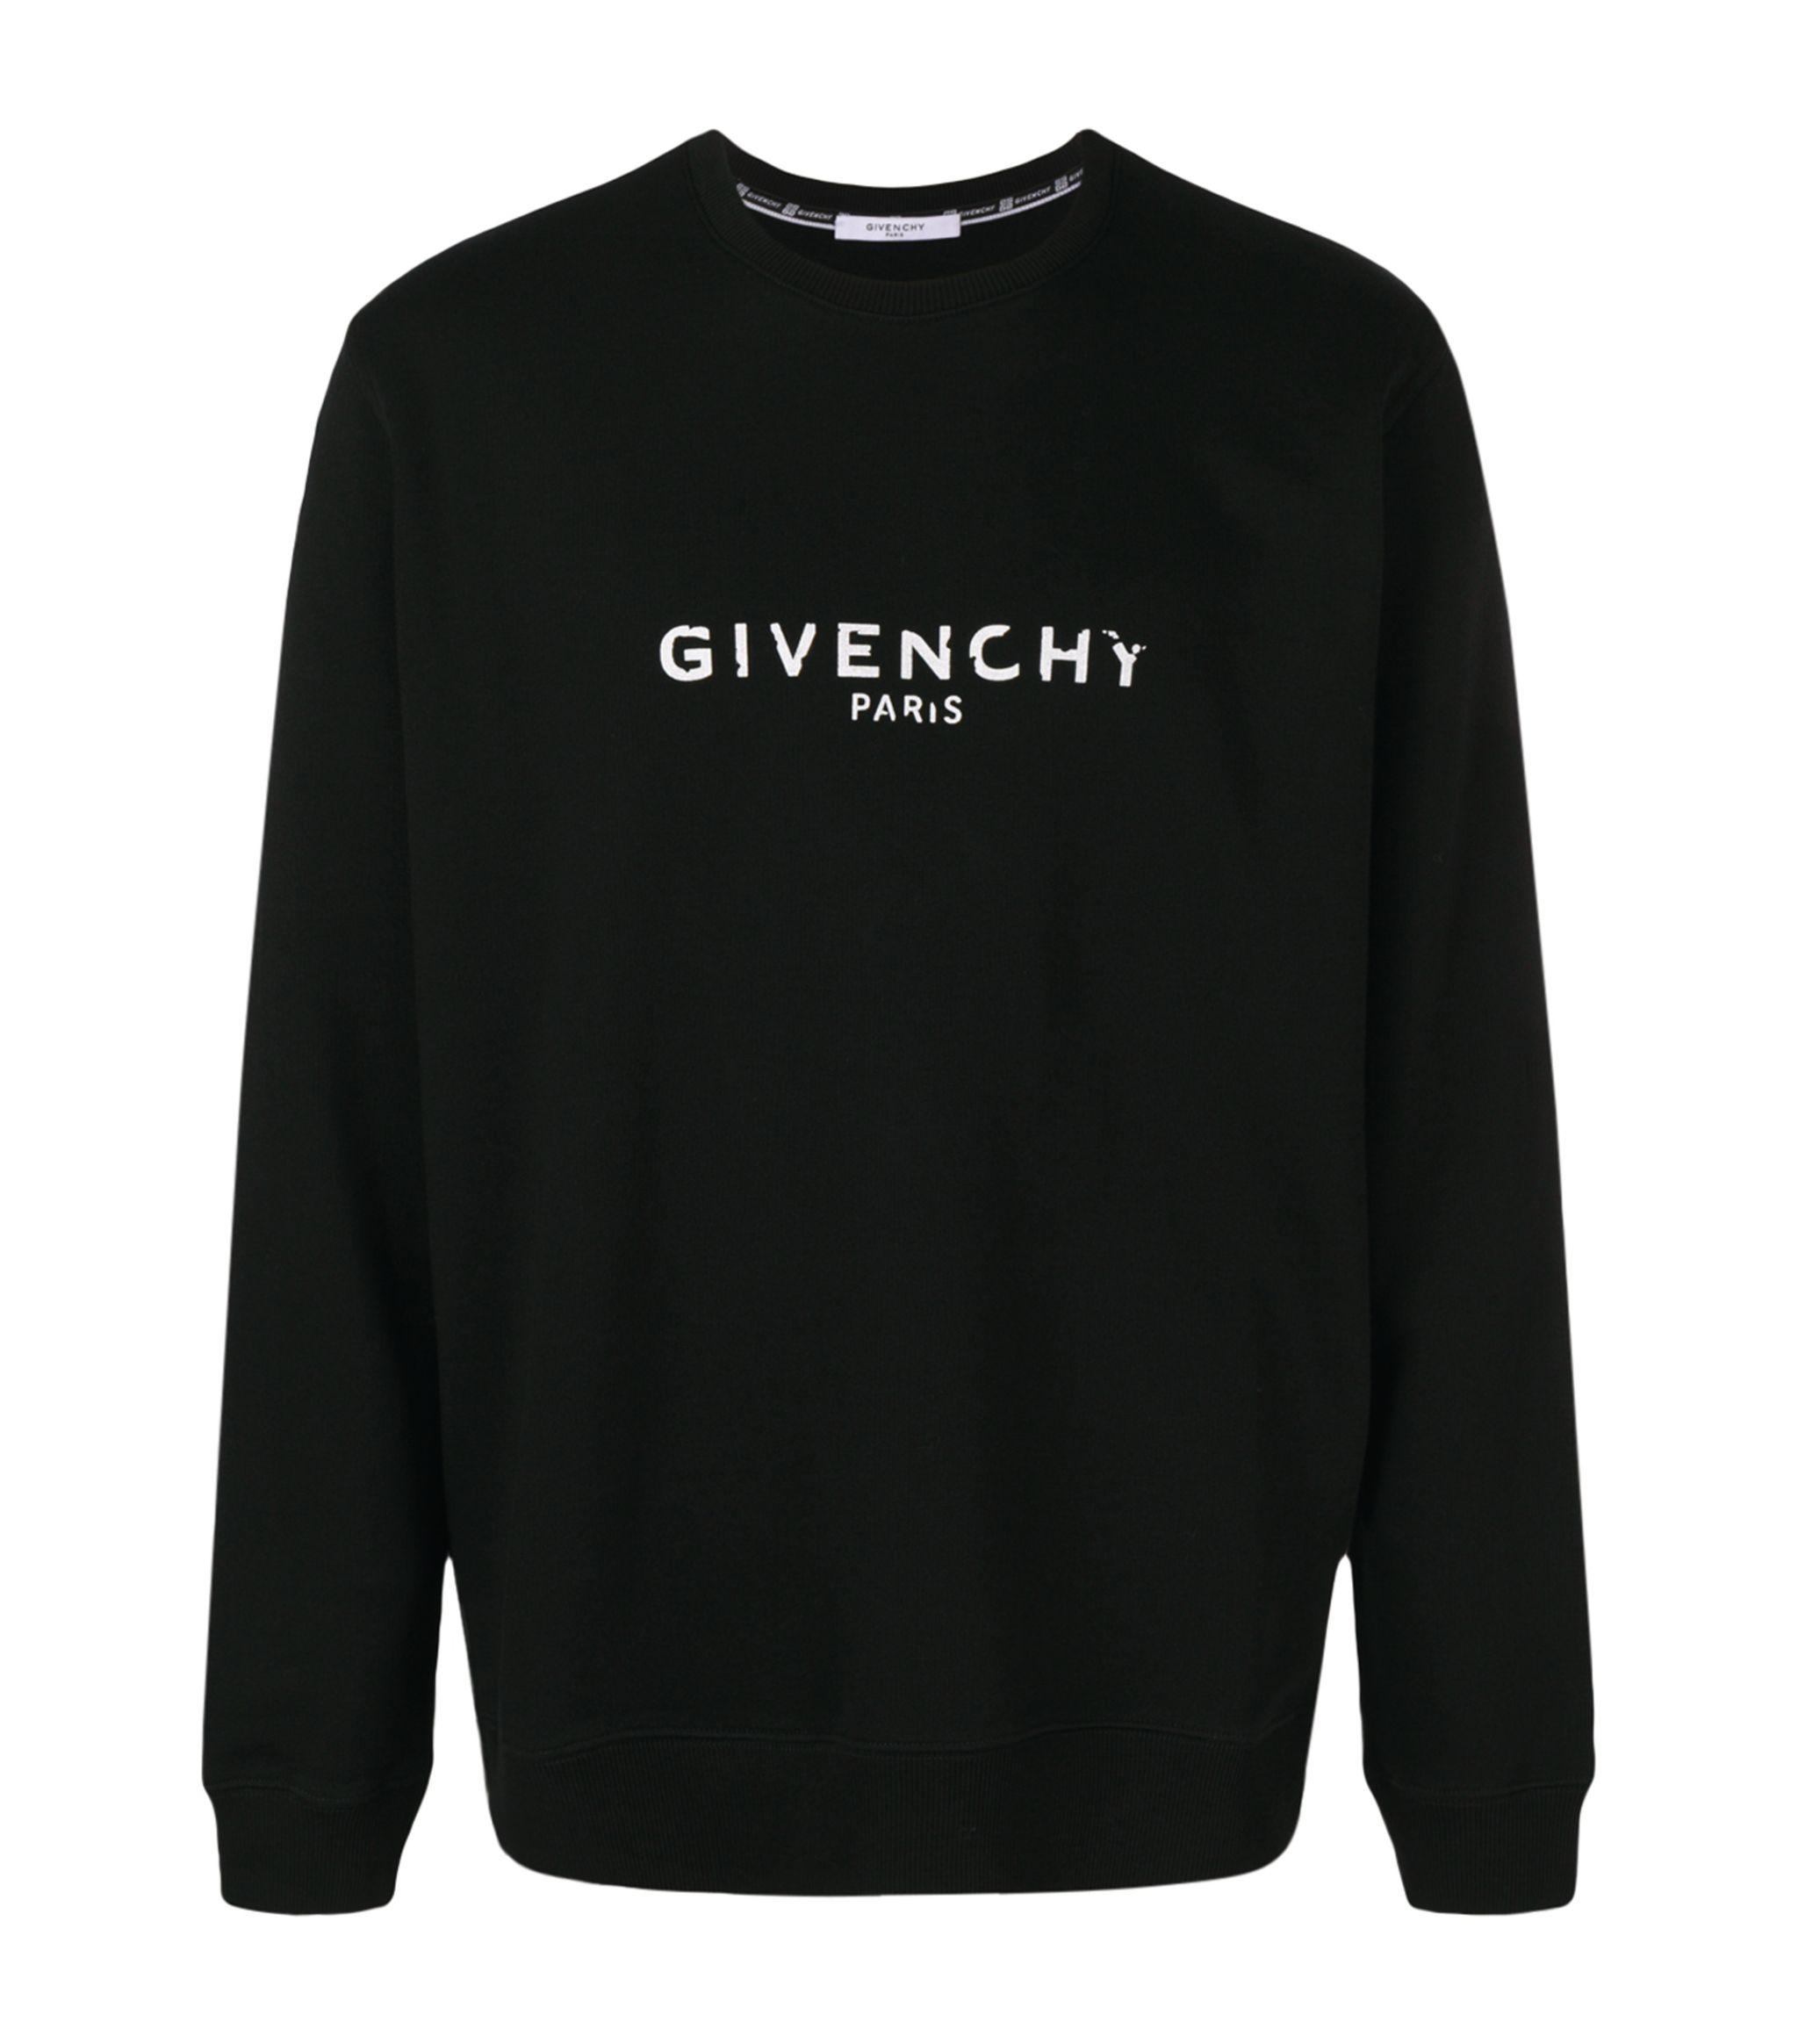 Givenchy Cotton Vintage Logo Sweatshirt in Black for Men - Lyst